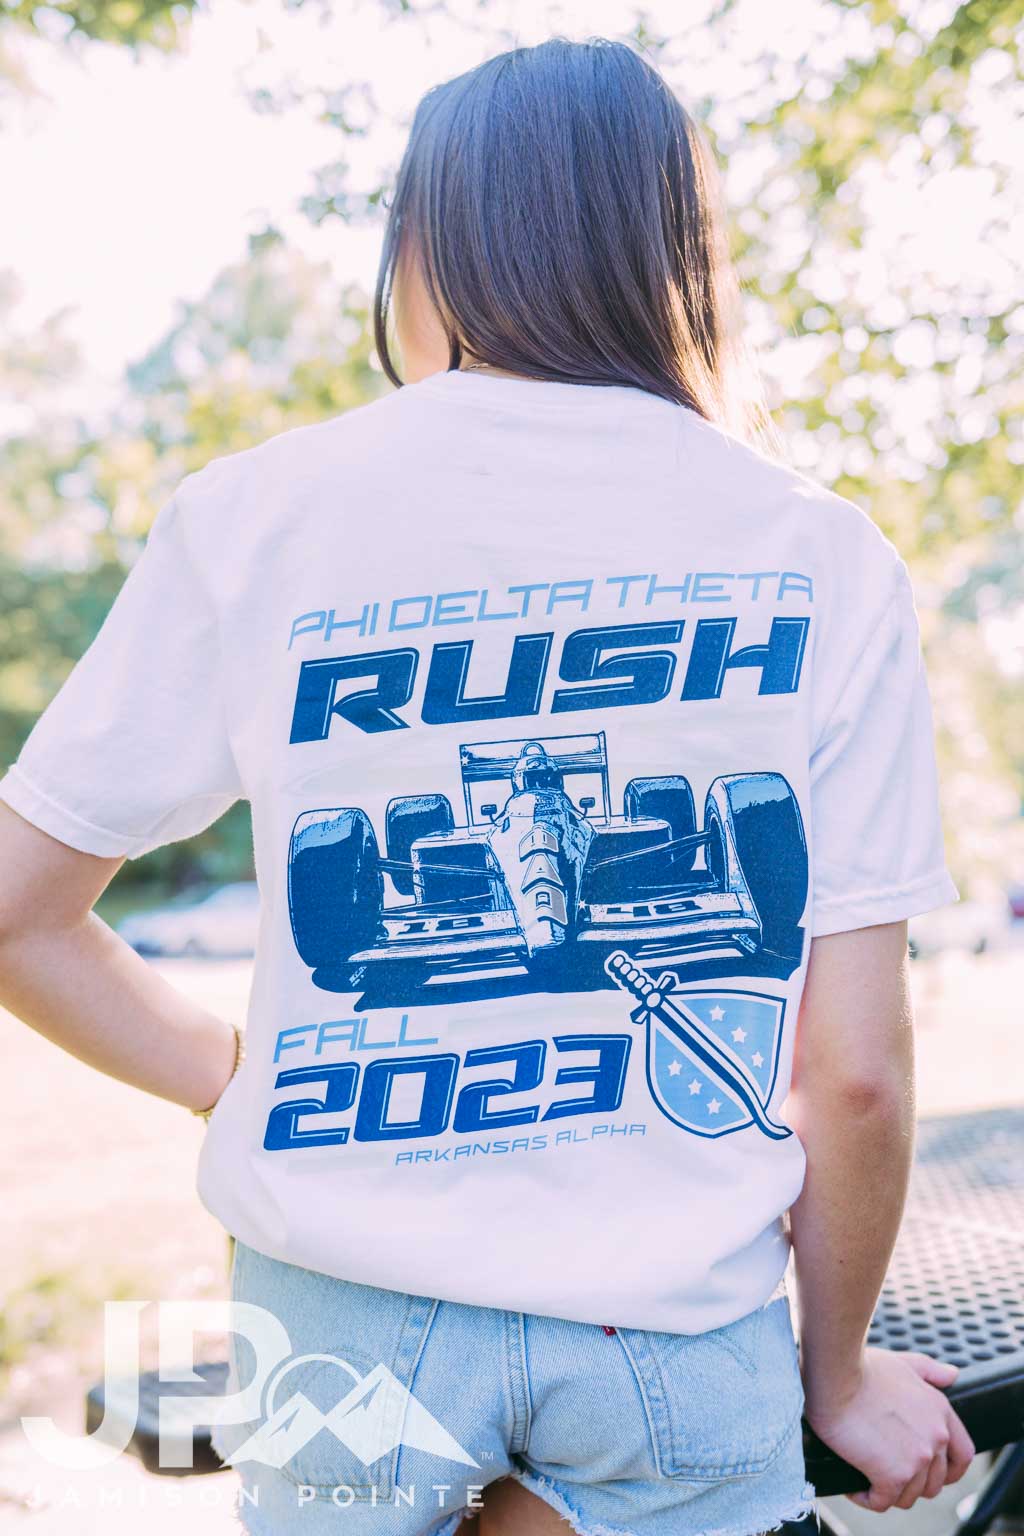 Phi Delt Racecar Fall Rush Tshirt